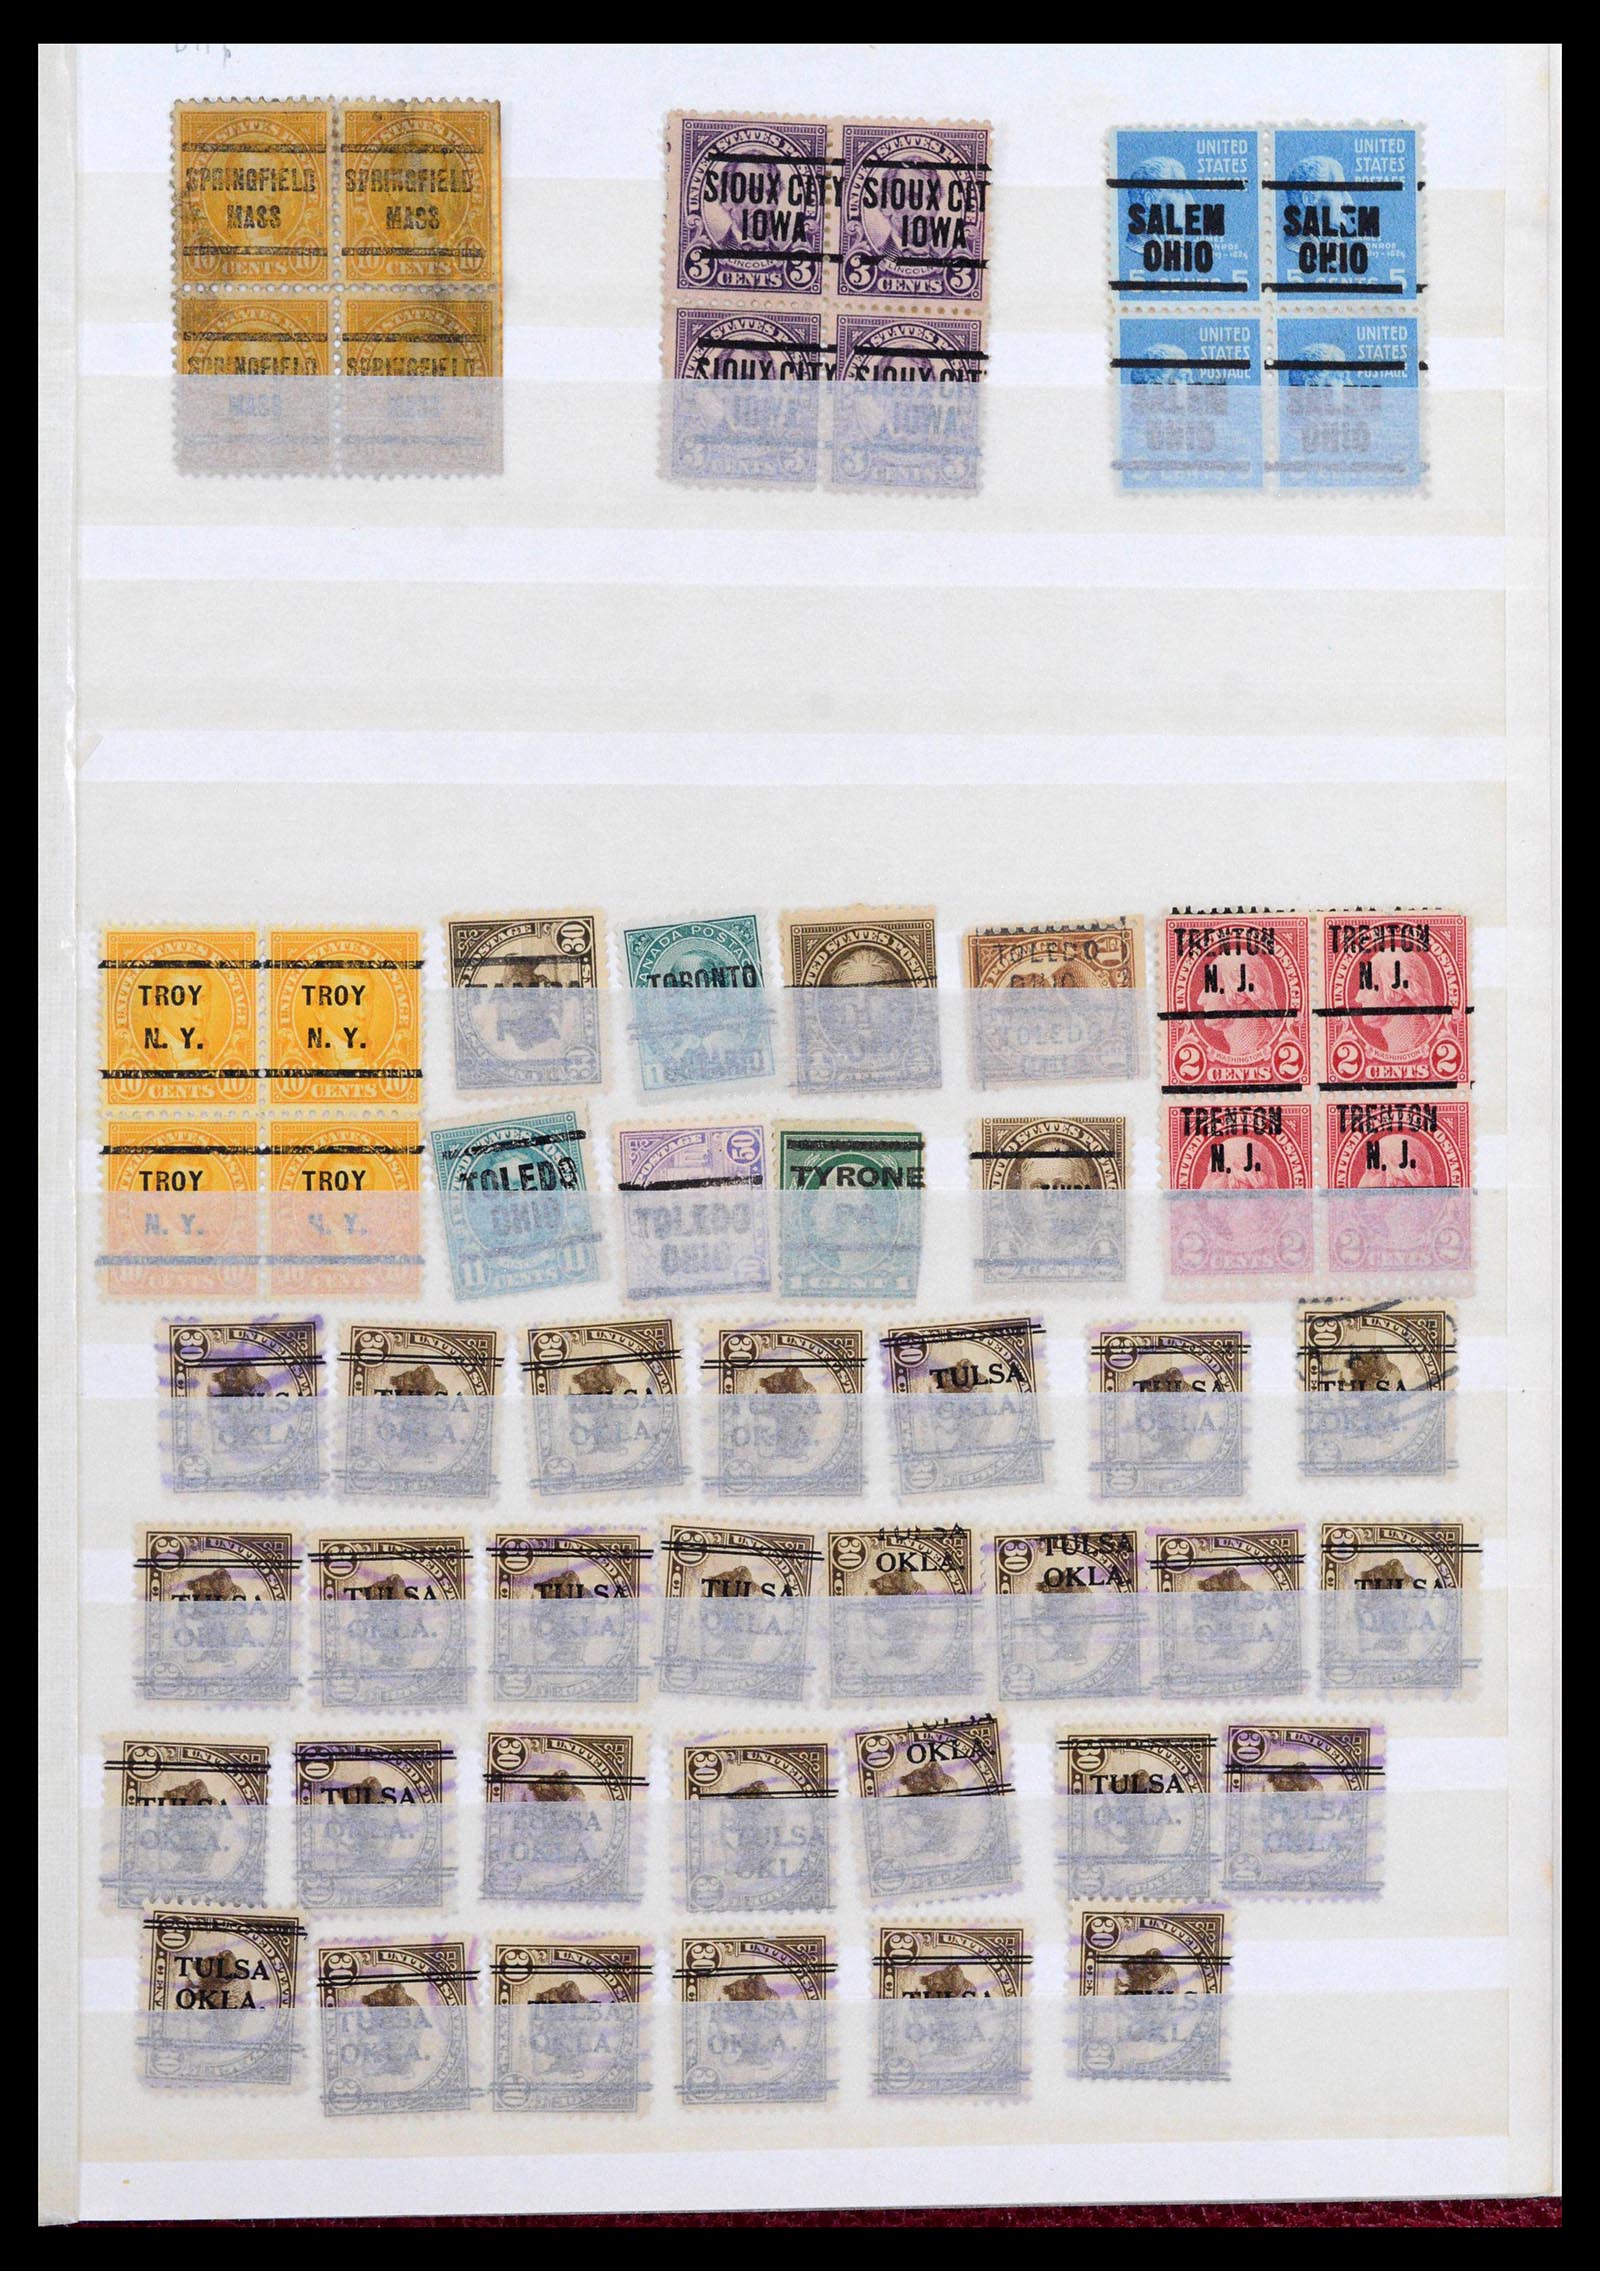 39366 0027 - Stamp collection 39366 USA precancels 1892-1940.